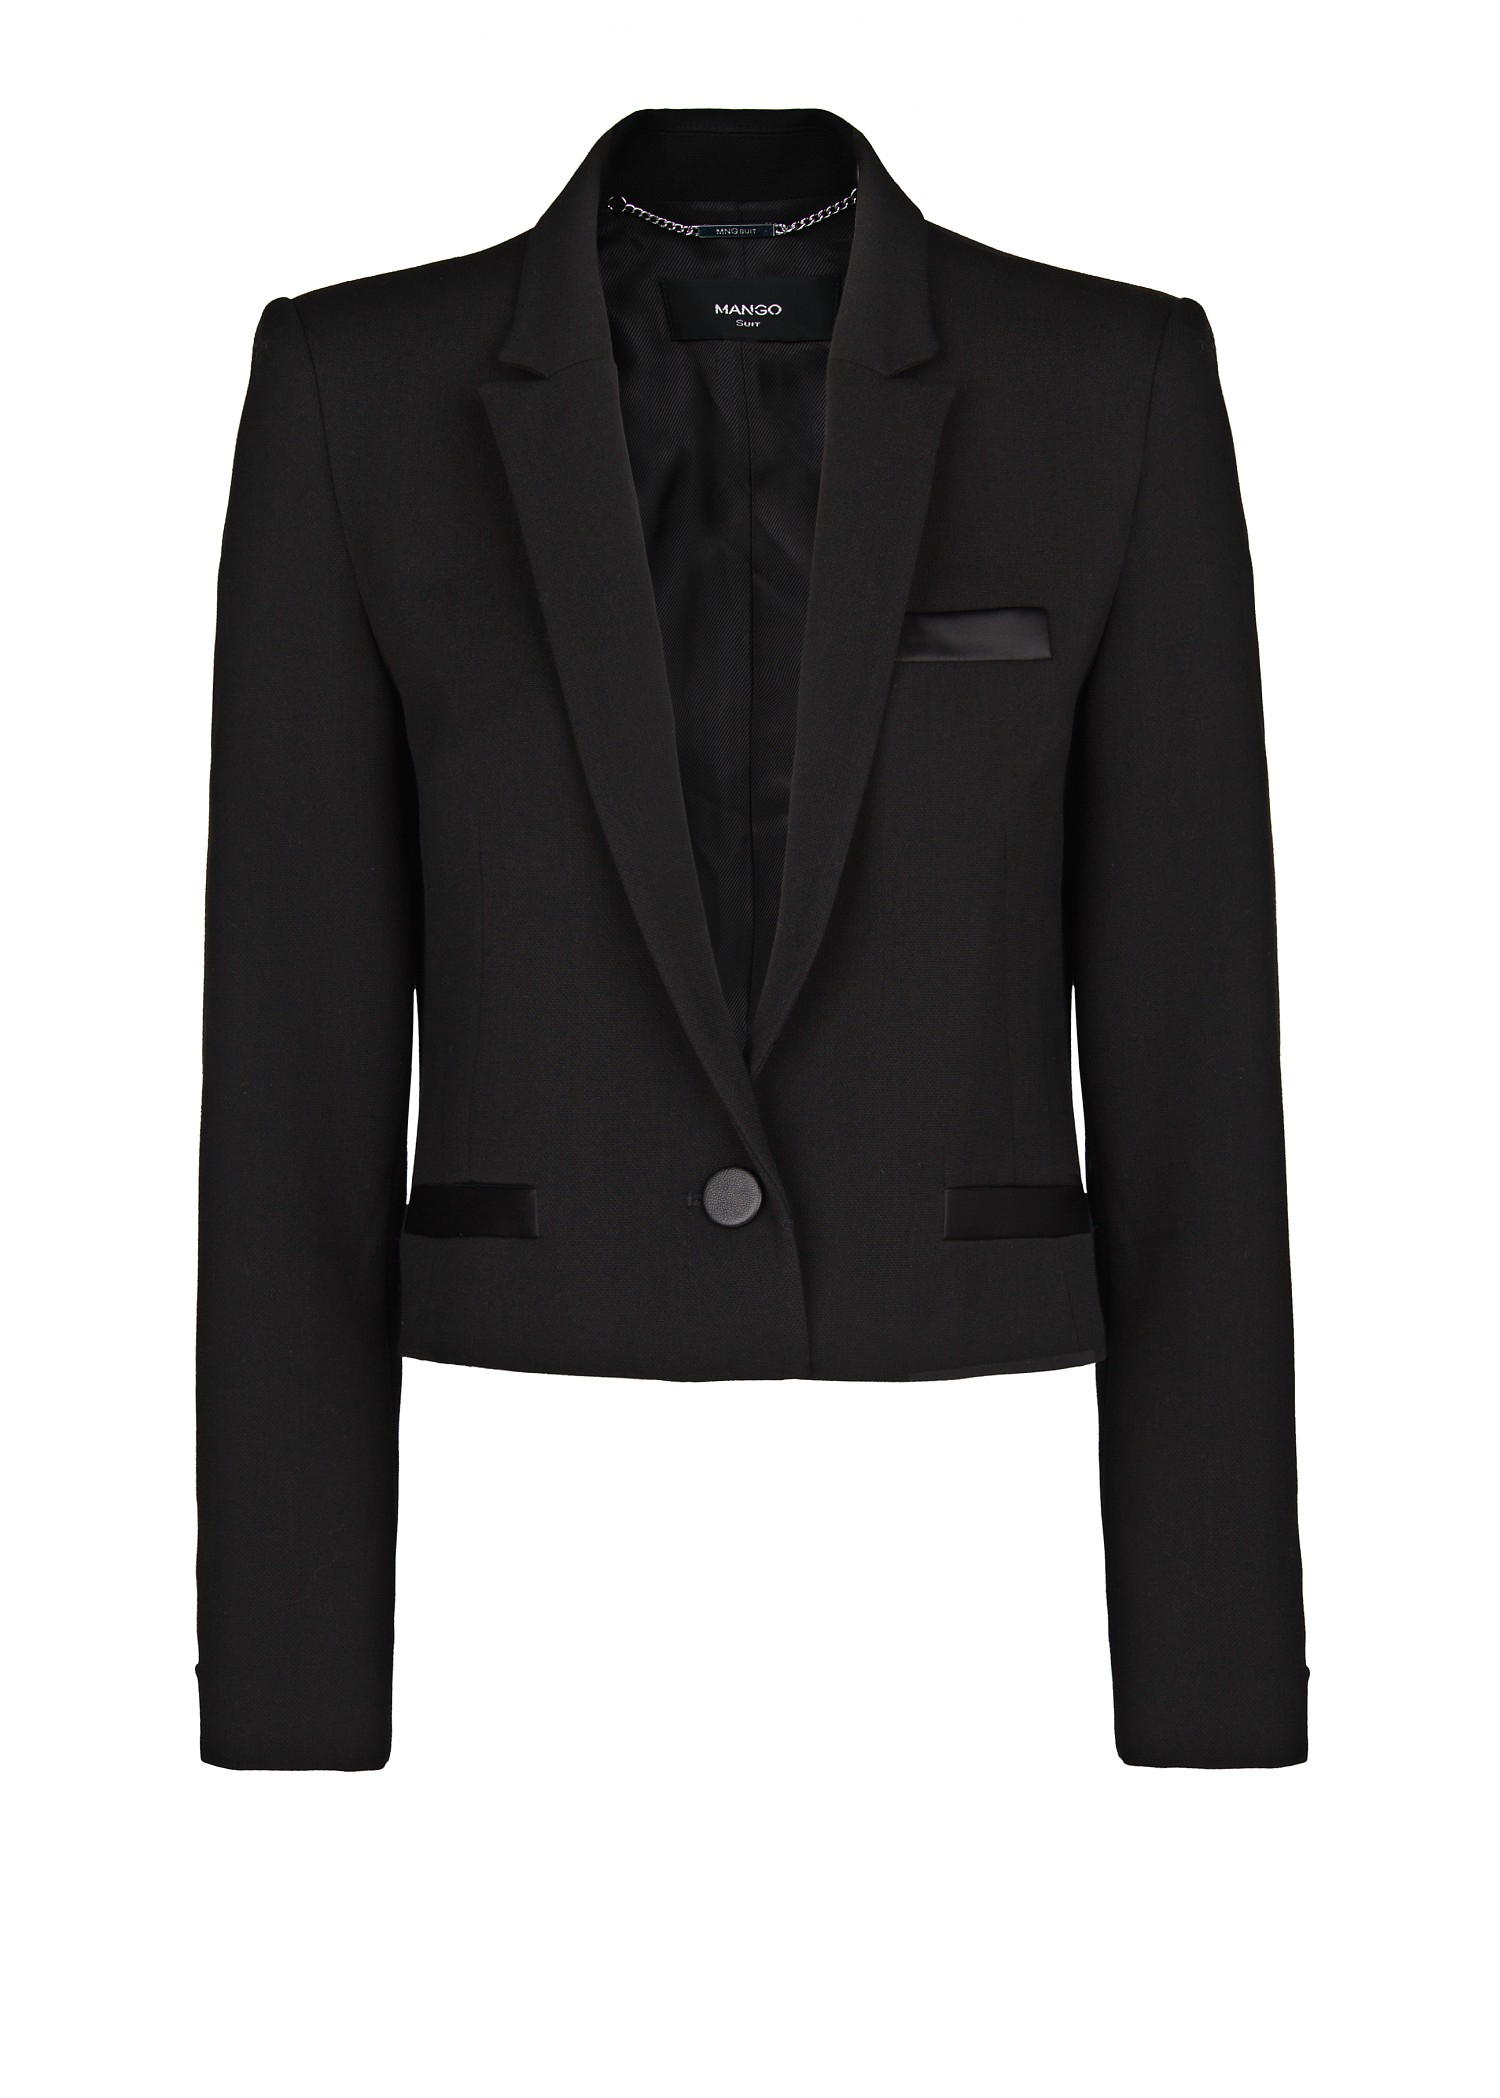 Lyst - Mango Cropped Tuxedo Blazer in Black